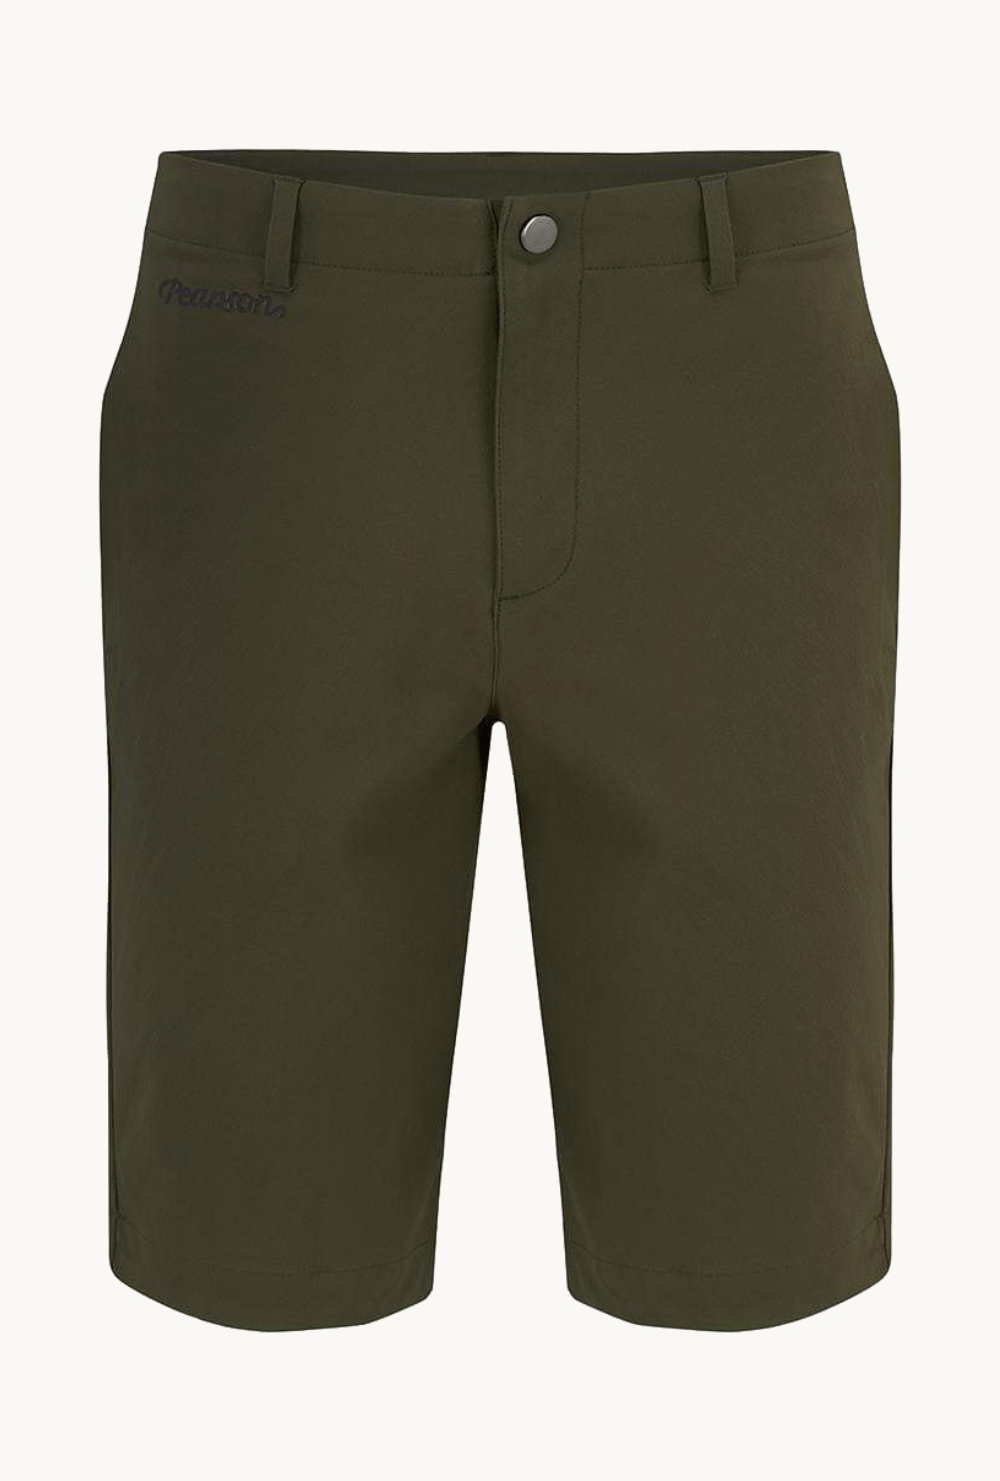 Pearson 1860  Kick Back - Urban Commuter Shorts Olive  Xx-large 38 / Olive